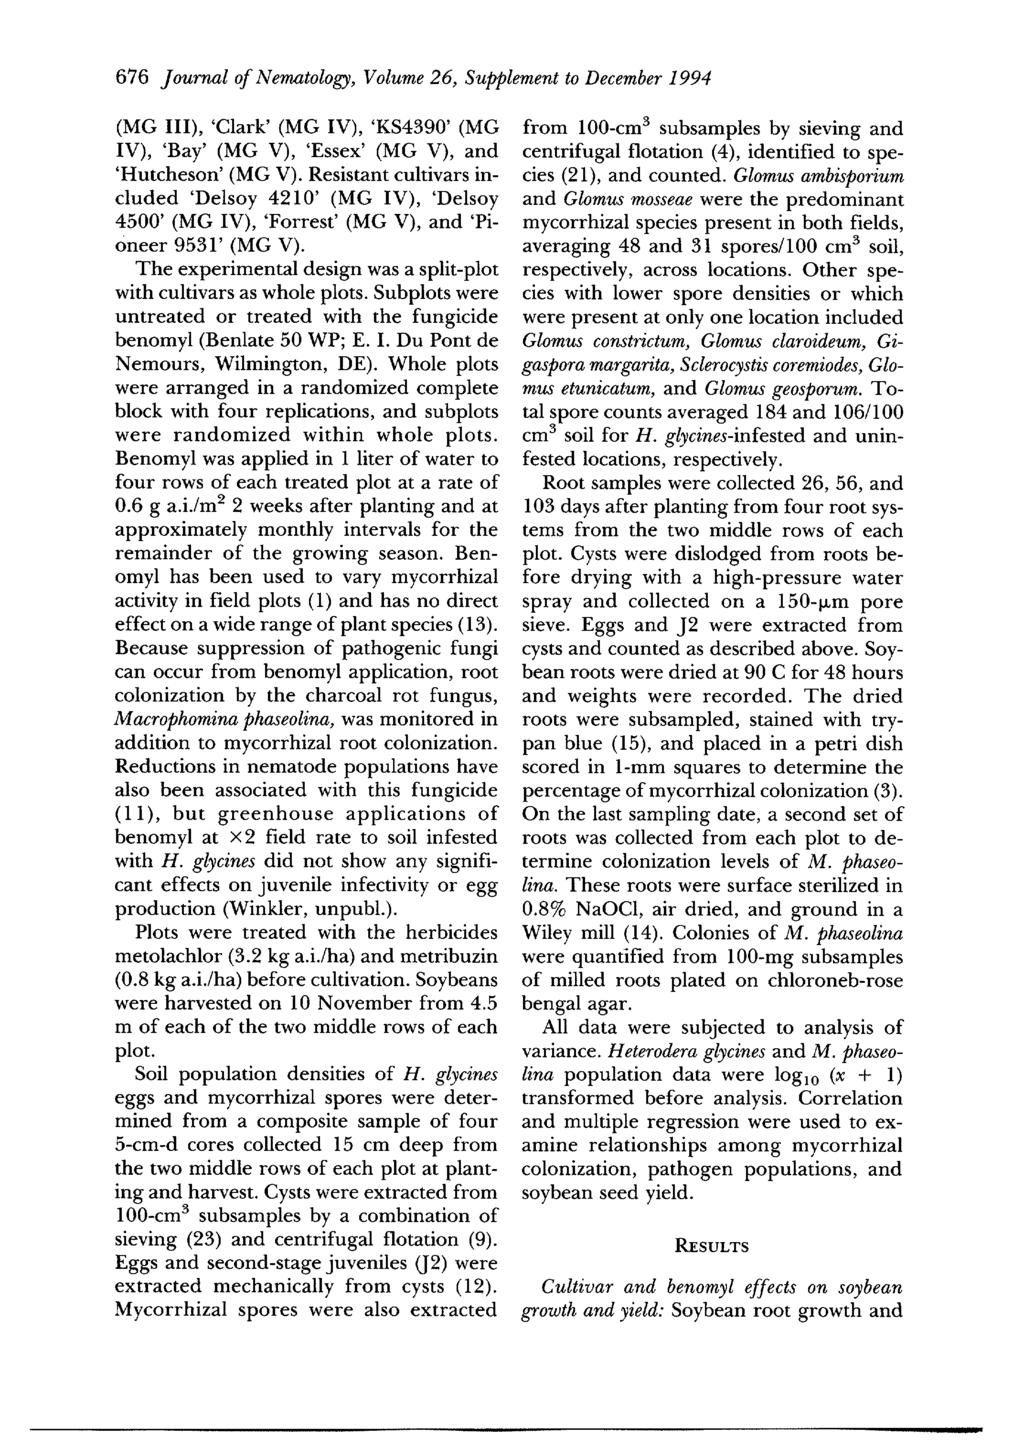 676 Journal of Nematology, Volume 26, Supplement to December 1994 (MG III), 'Clark' (MG IV), 'KS4390' (MG IV), 'Bay' (MG V), 'Essex' (MG V), and 'Hutcheson' (MG V).